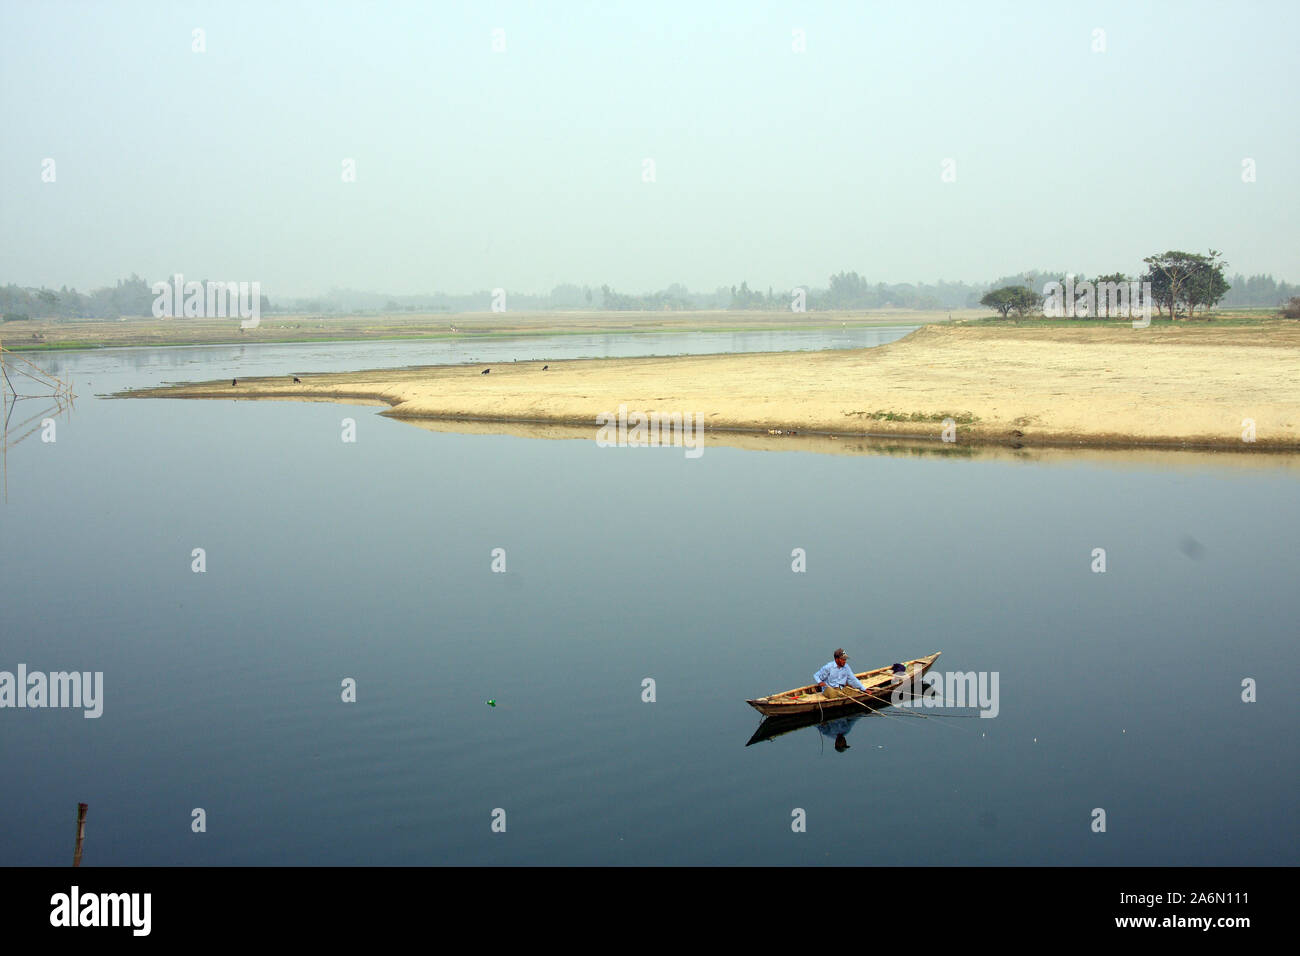 A man fishing in the river. Bangladesh. January 13, 2009. Stock Photo